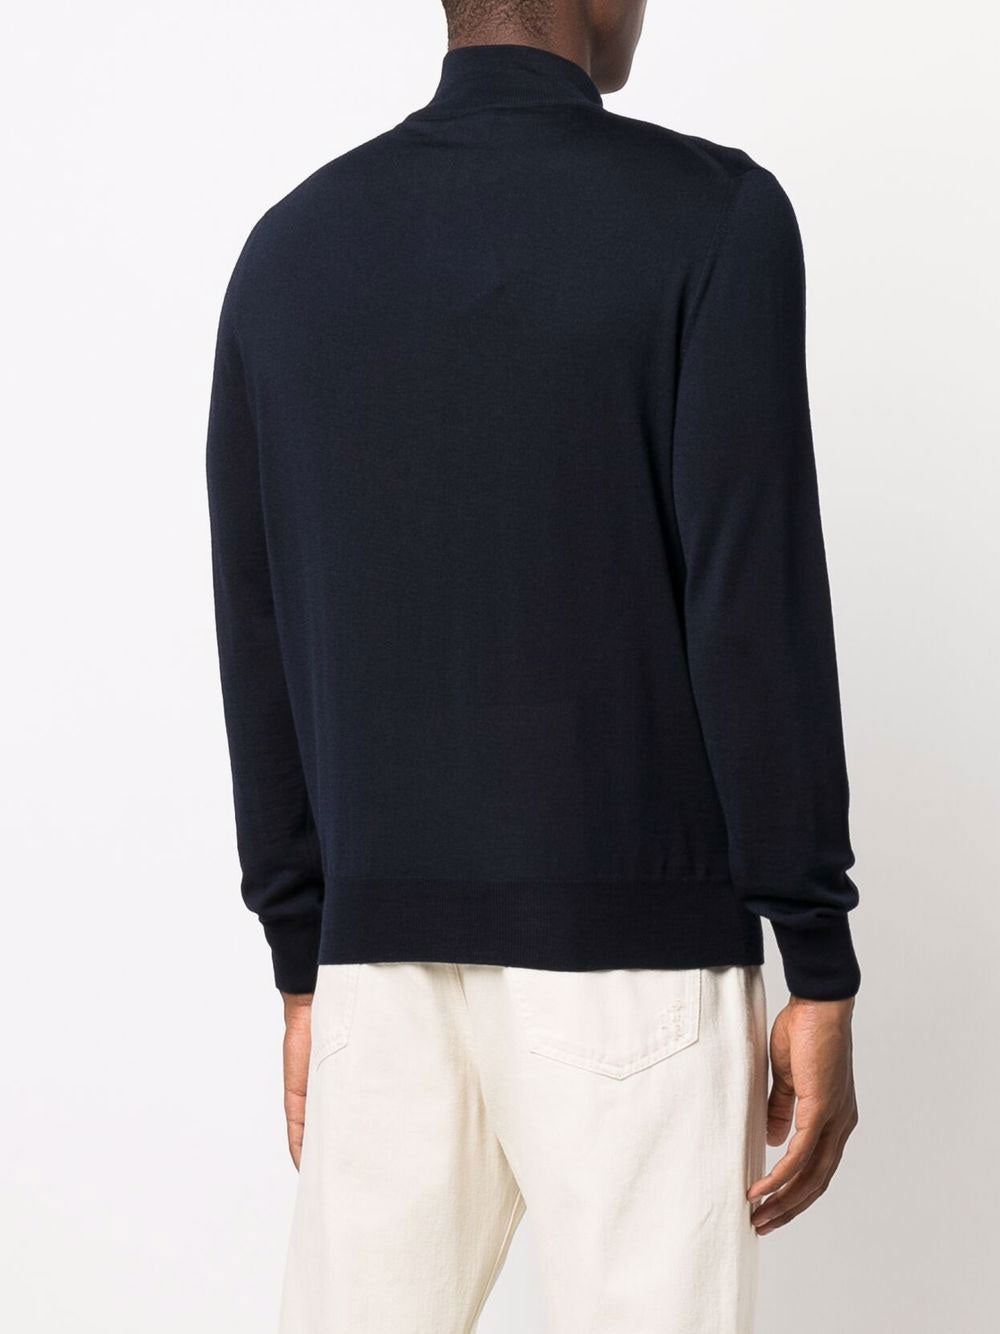 Long-sleeve knit jumper